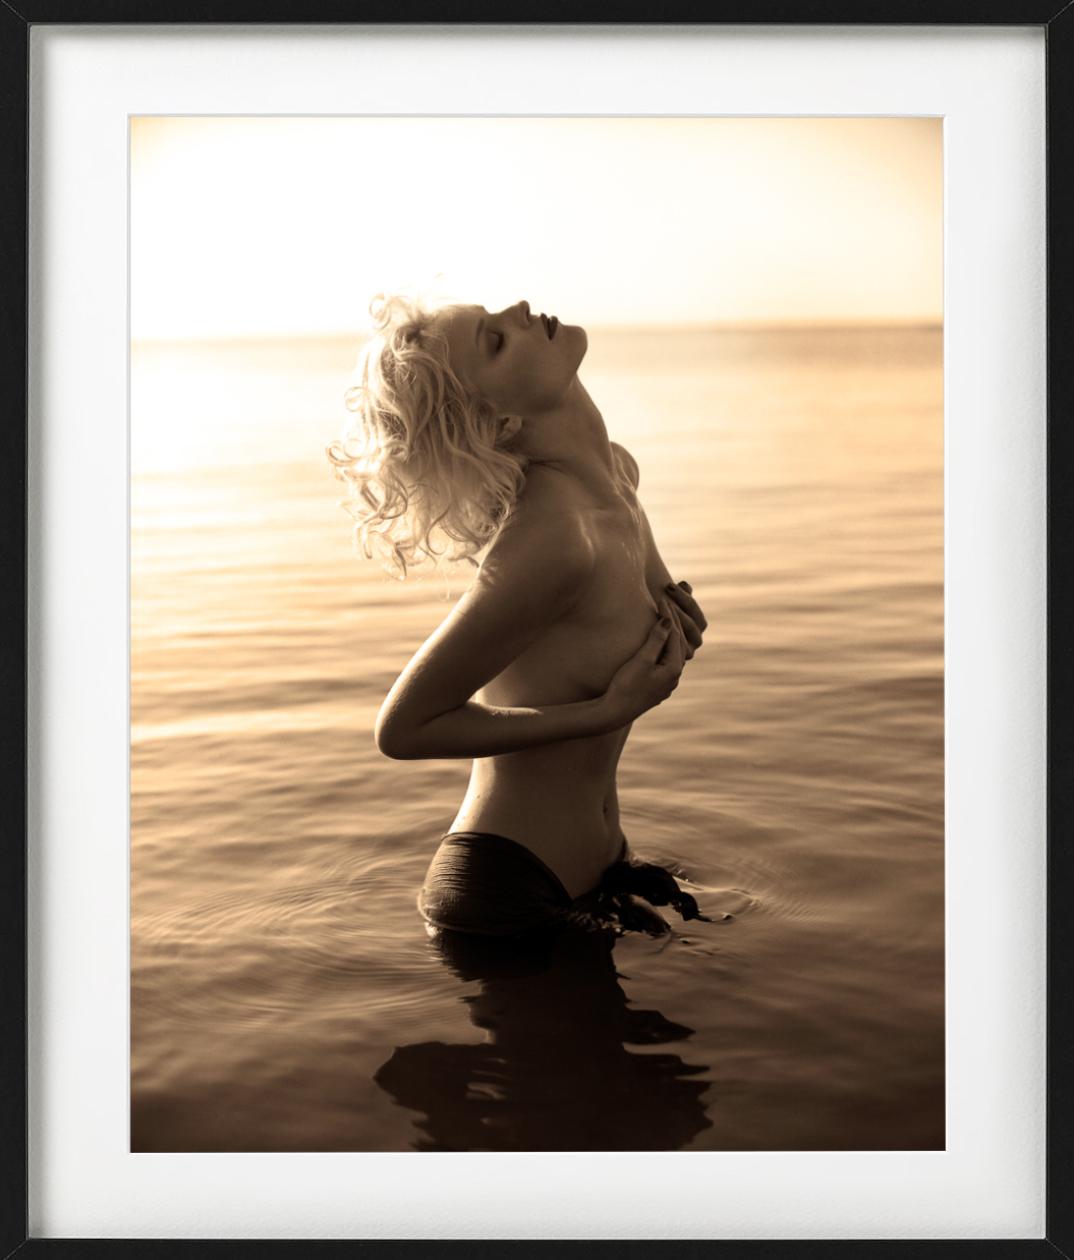 Eva Herzigova, Delano Hotel - nude model in water, fine art photography, 1996 For Sale 3